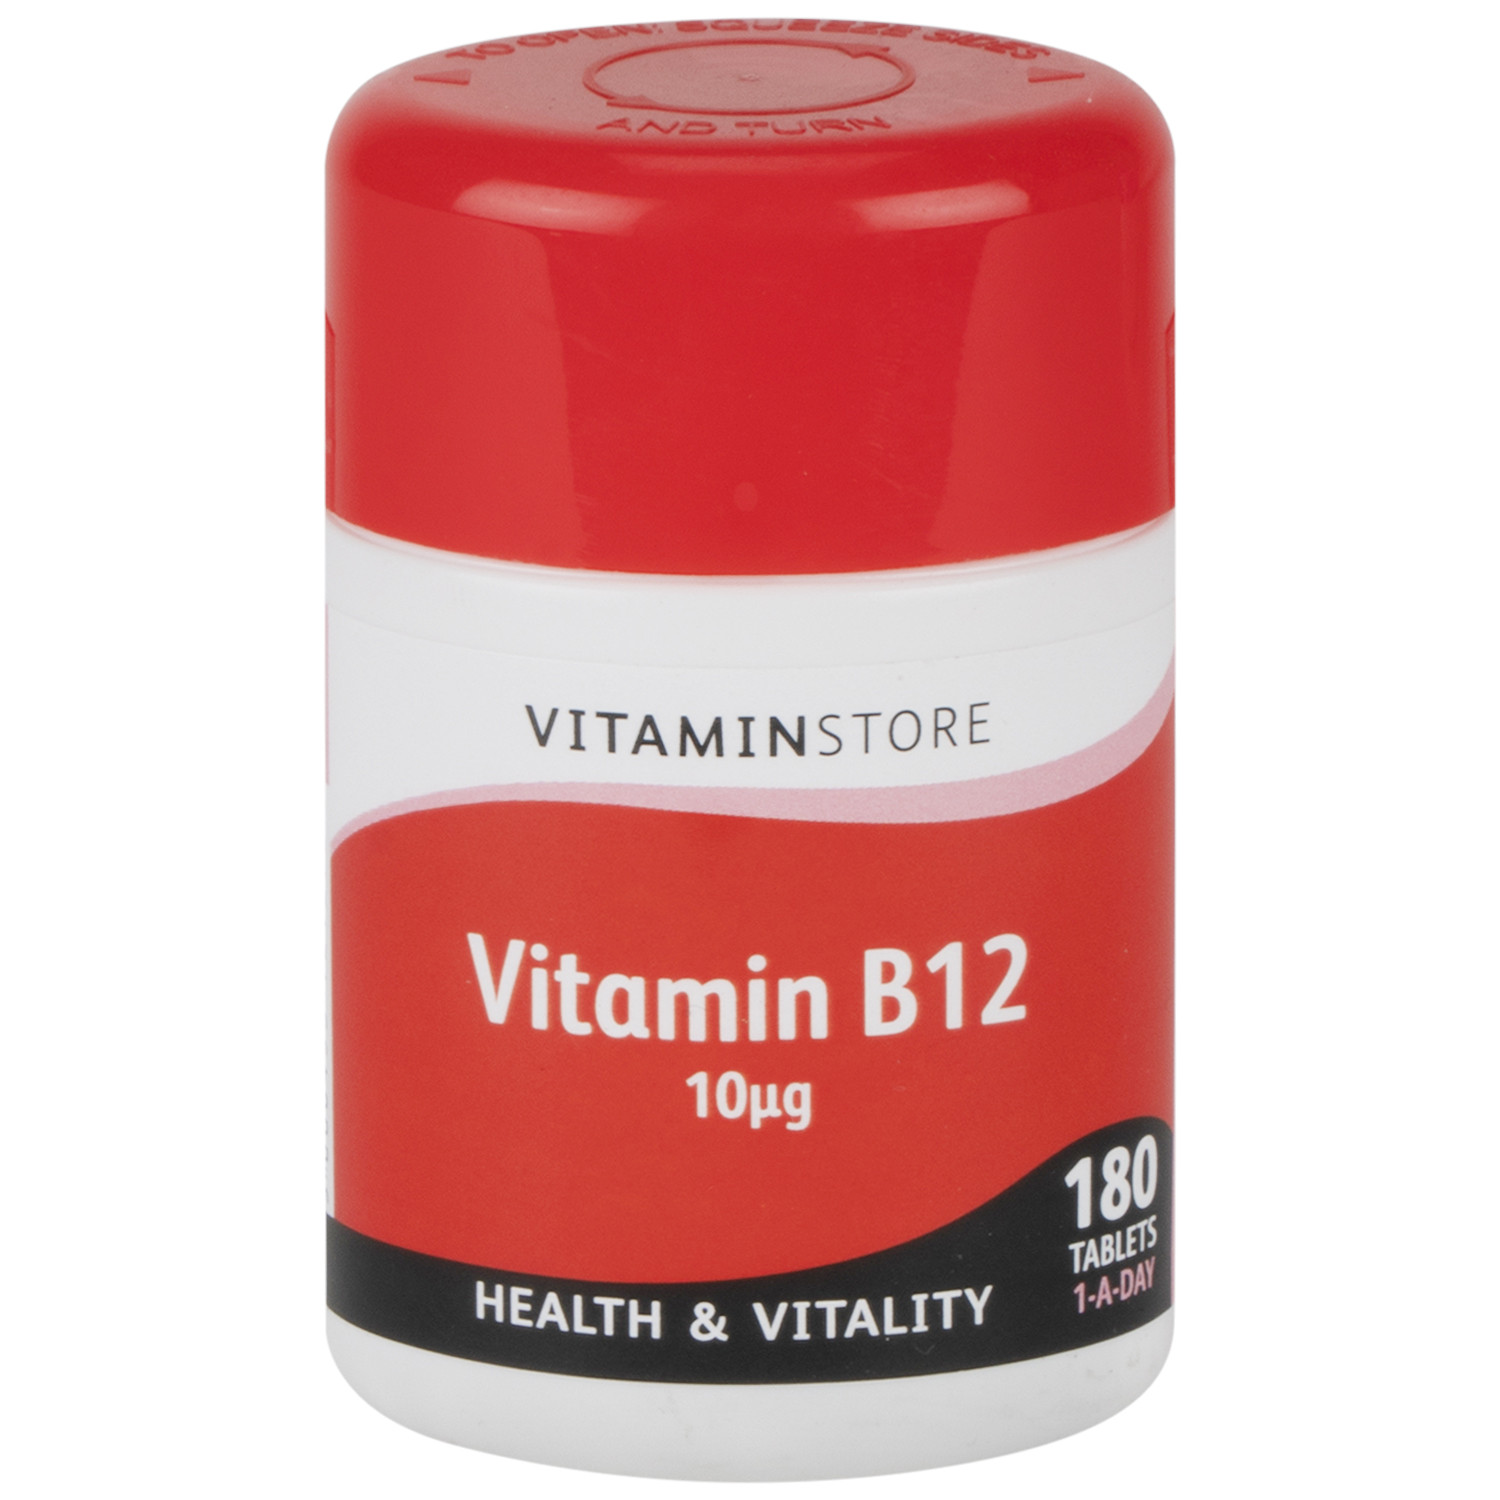 Vitamin B12 Tablets Image